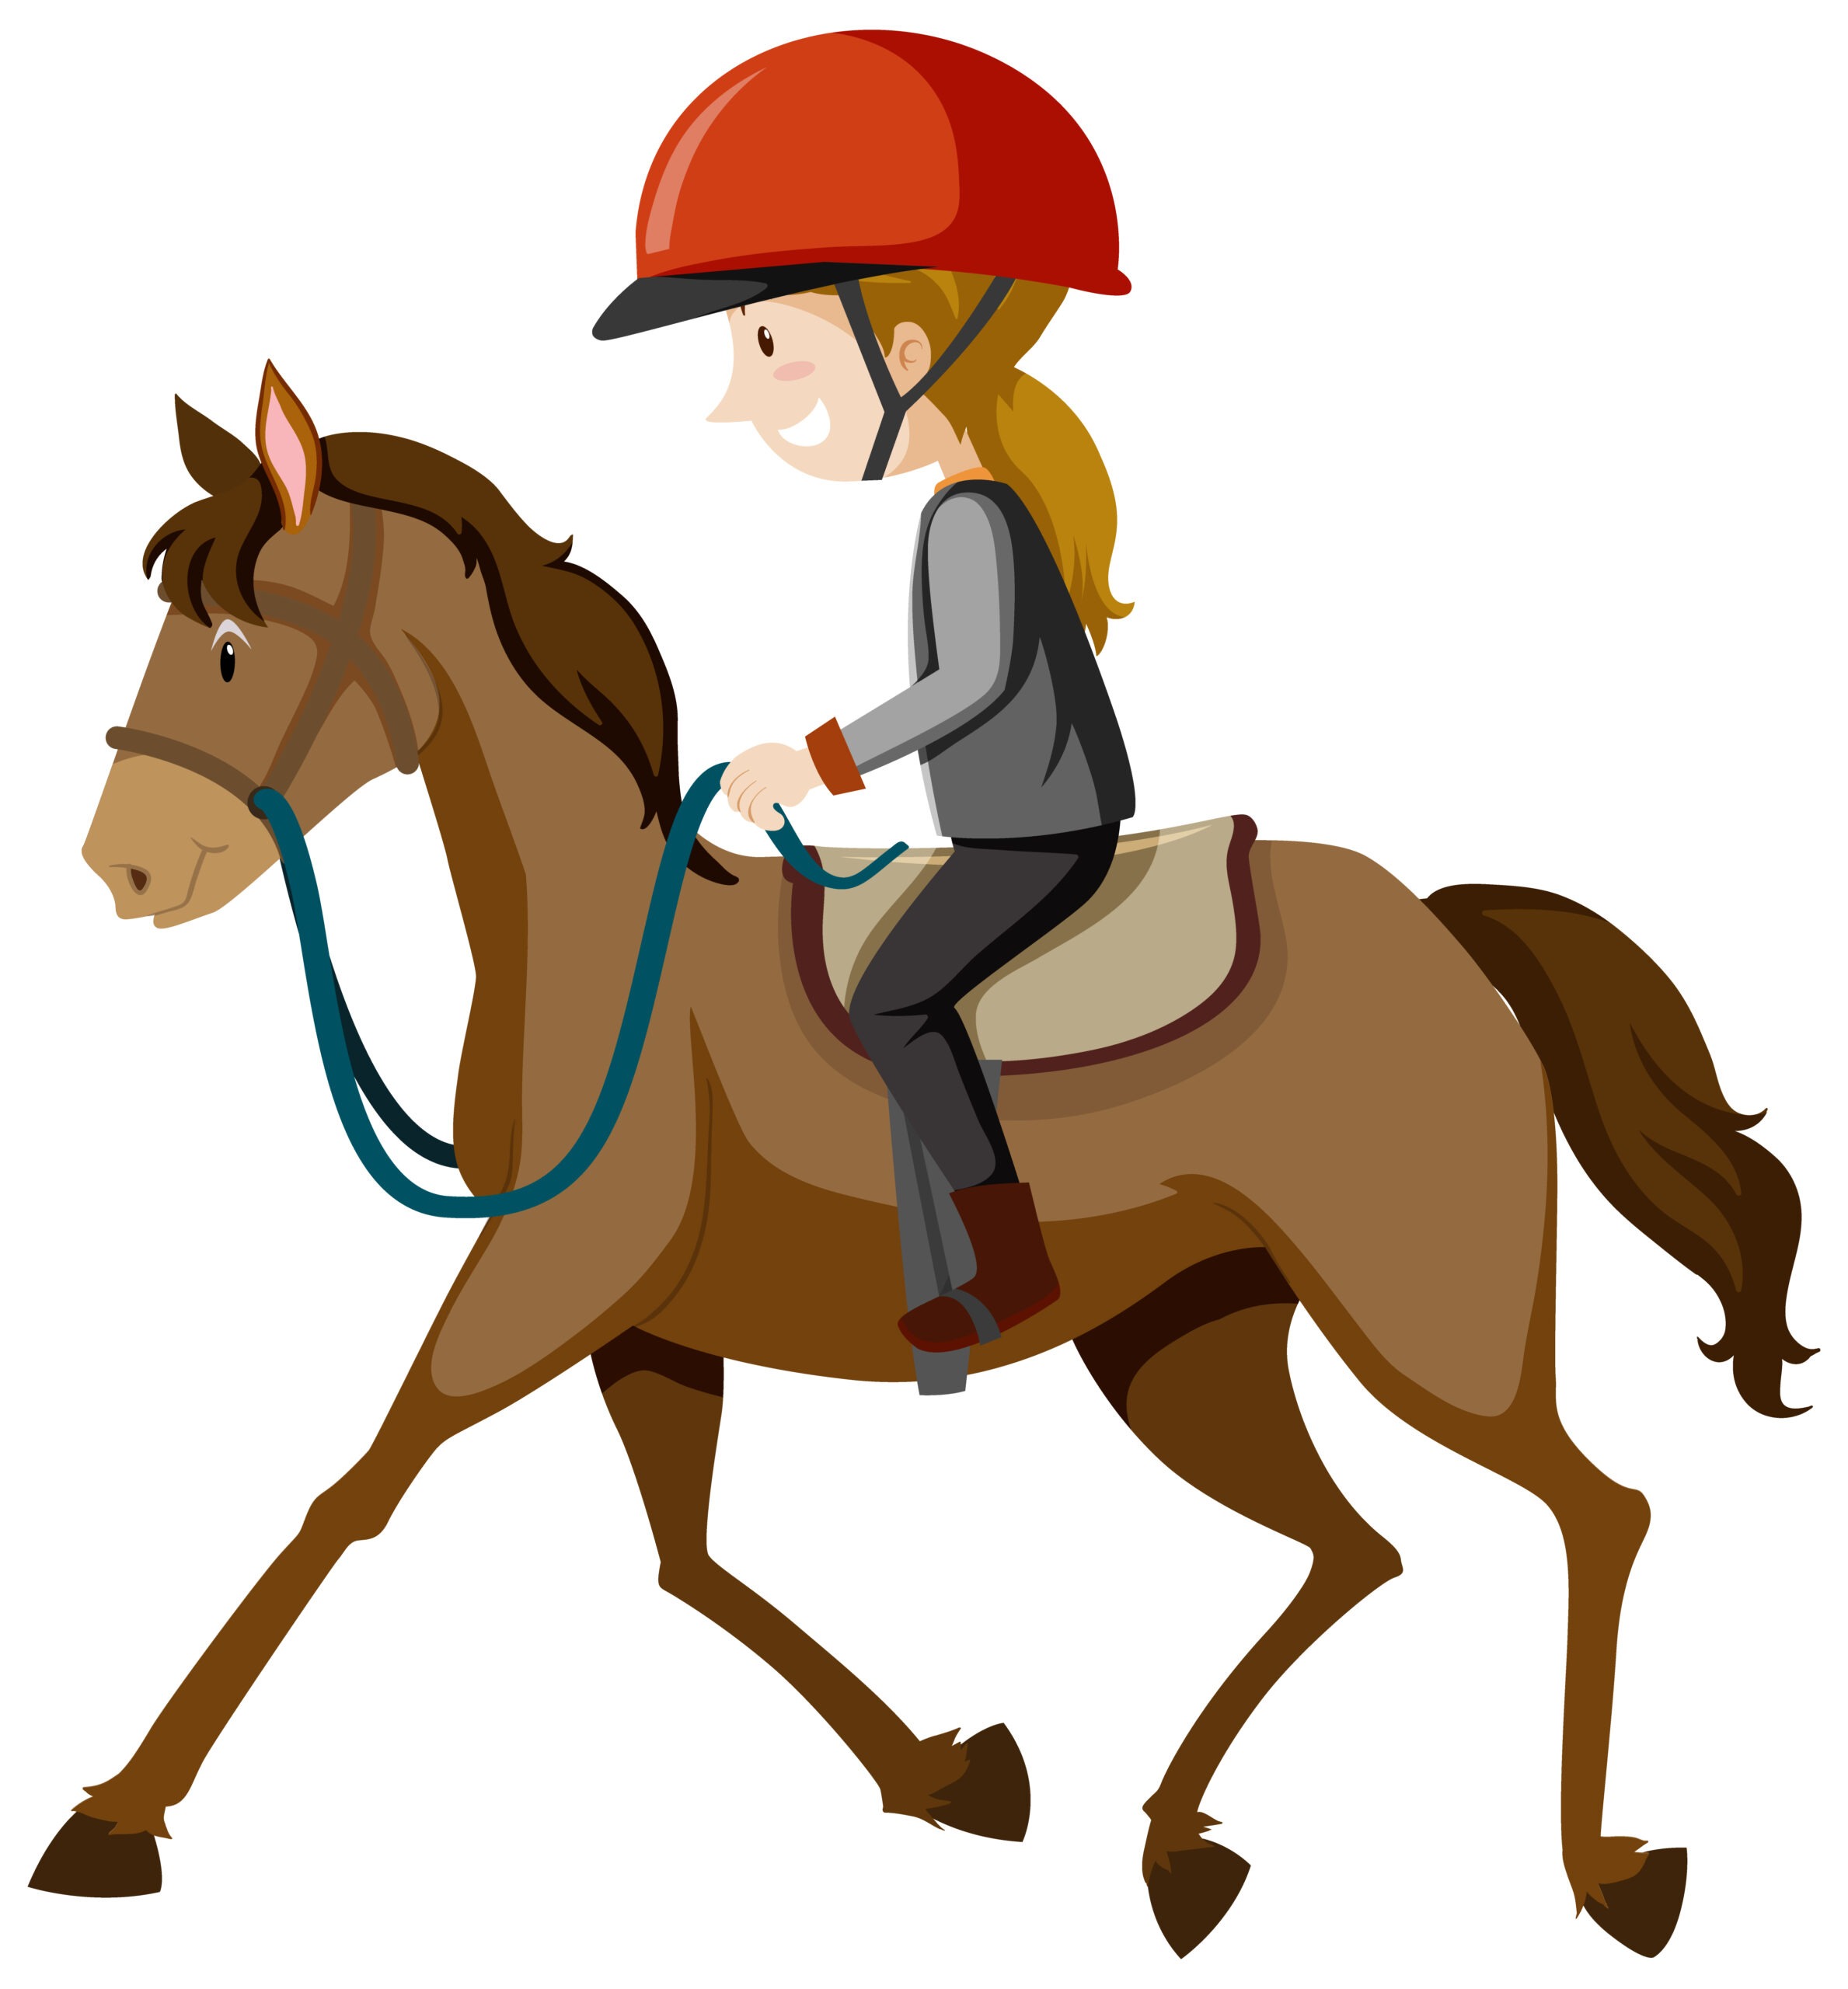 7 Tips to Make Your Horseback Riding More Enjoyable